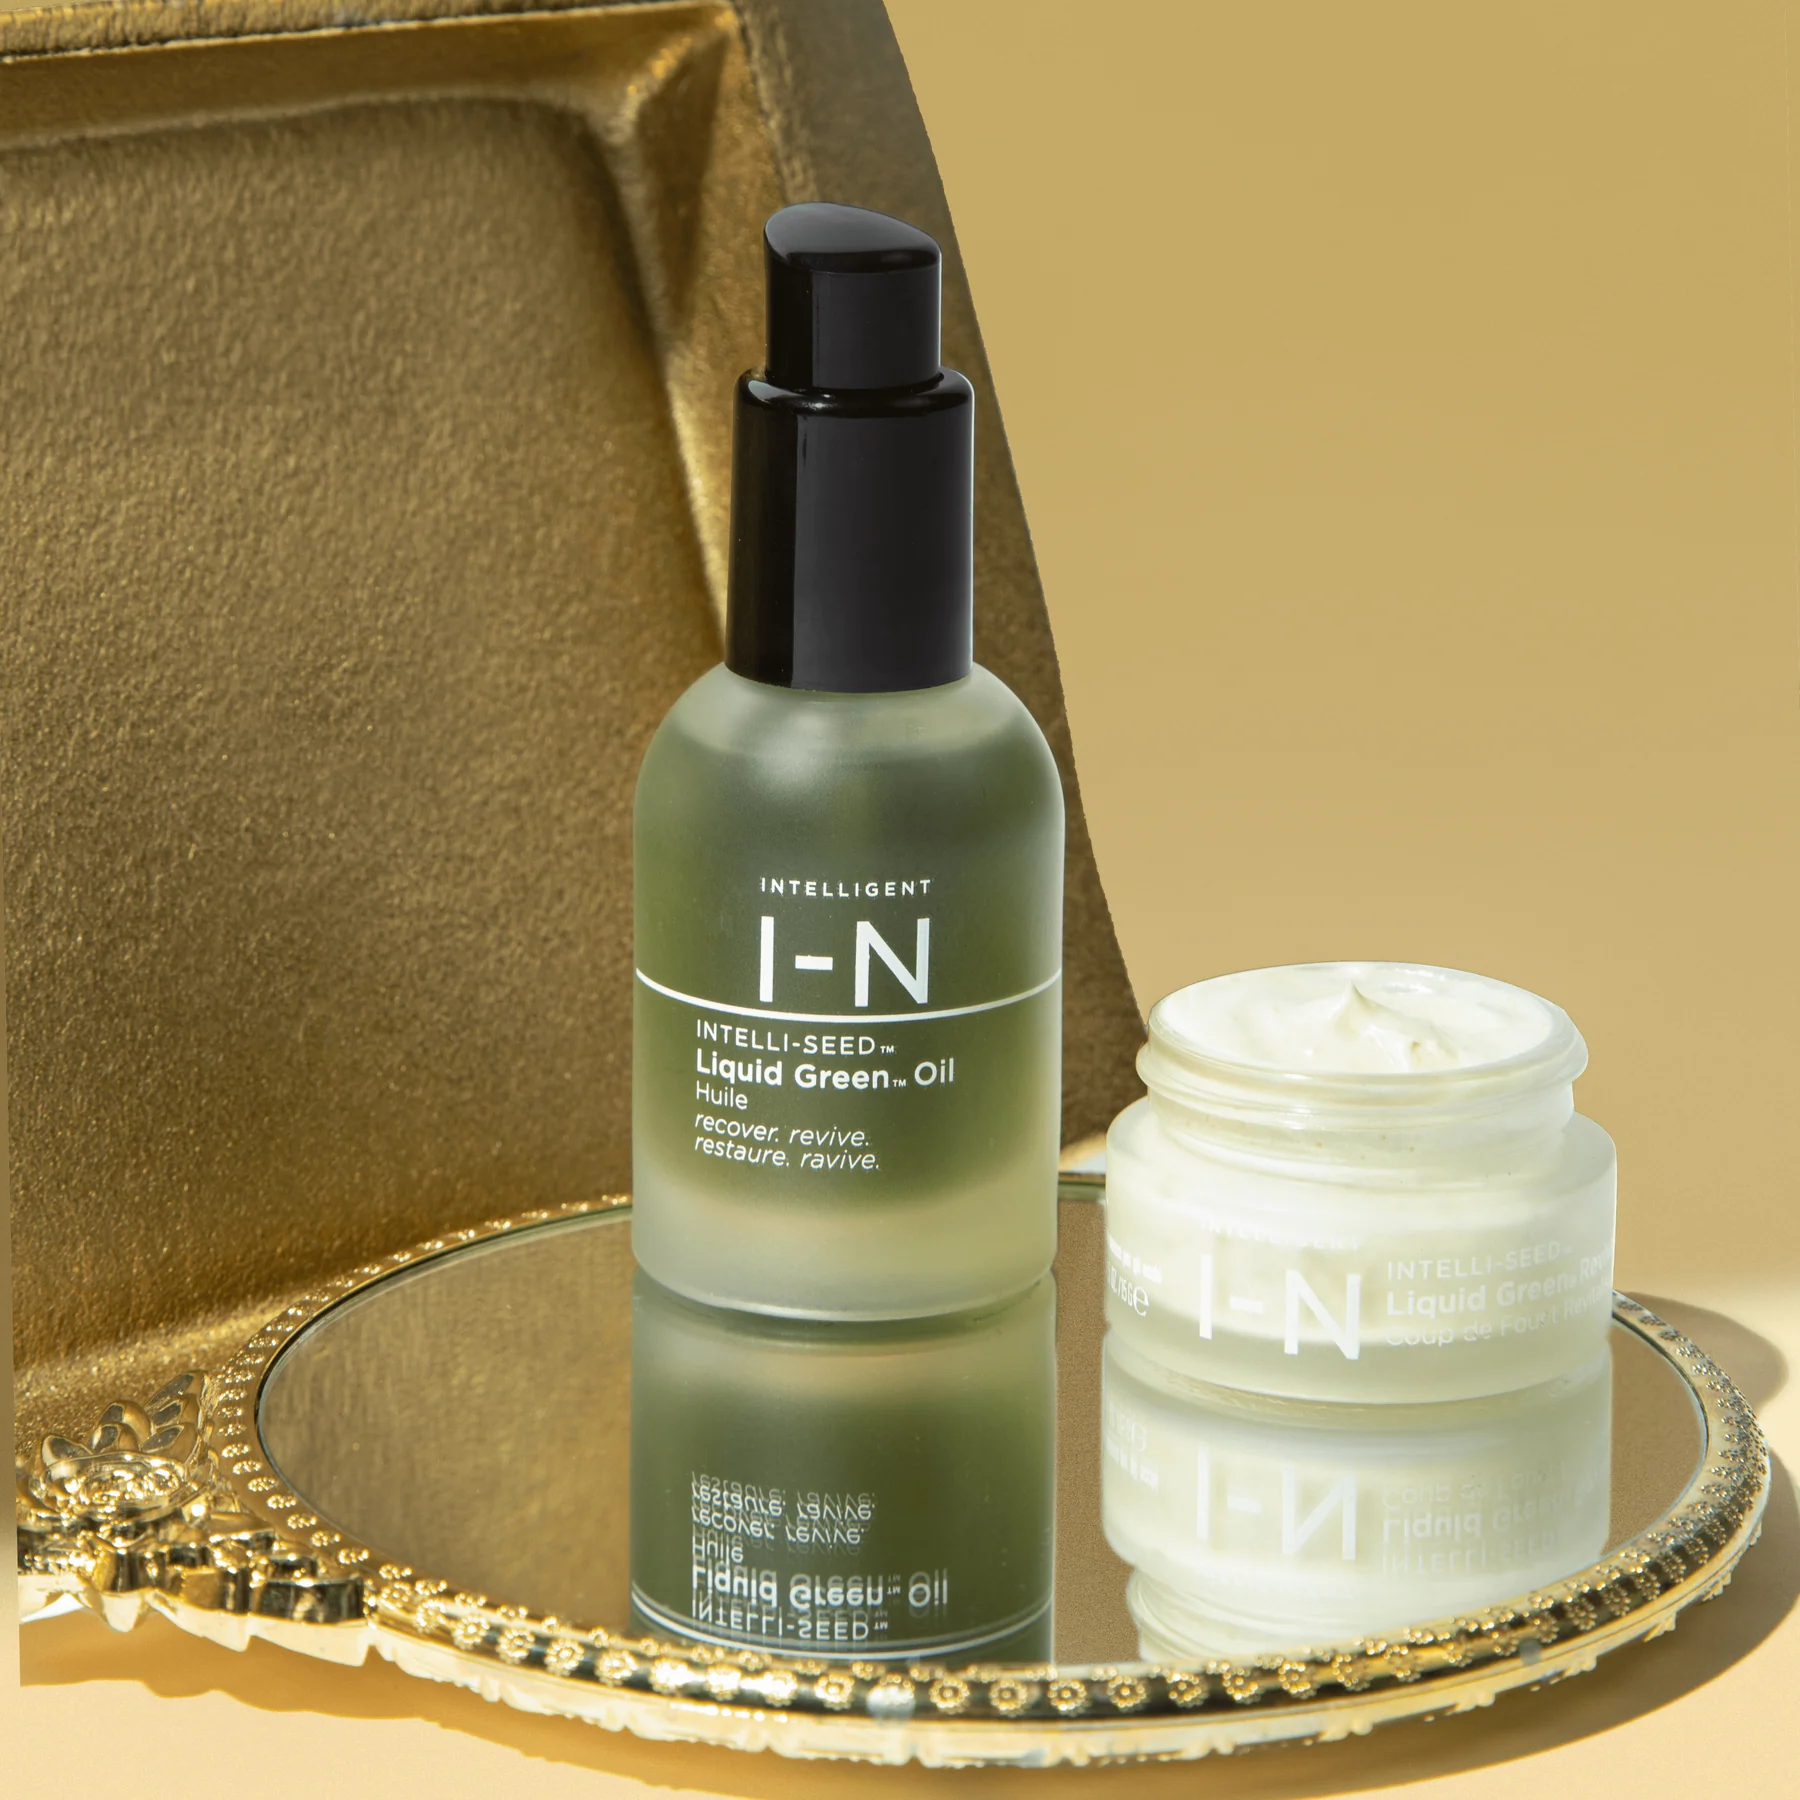 I-N Liquid Green Face Oil + Revival Eye Whip Kit by Intelligent Nutrients